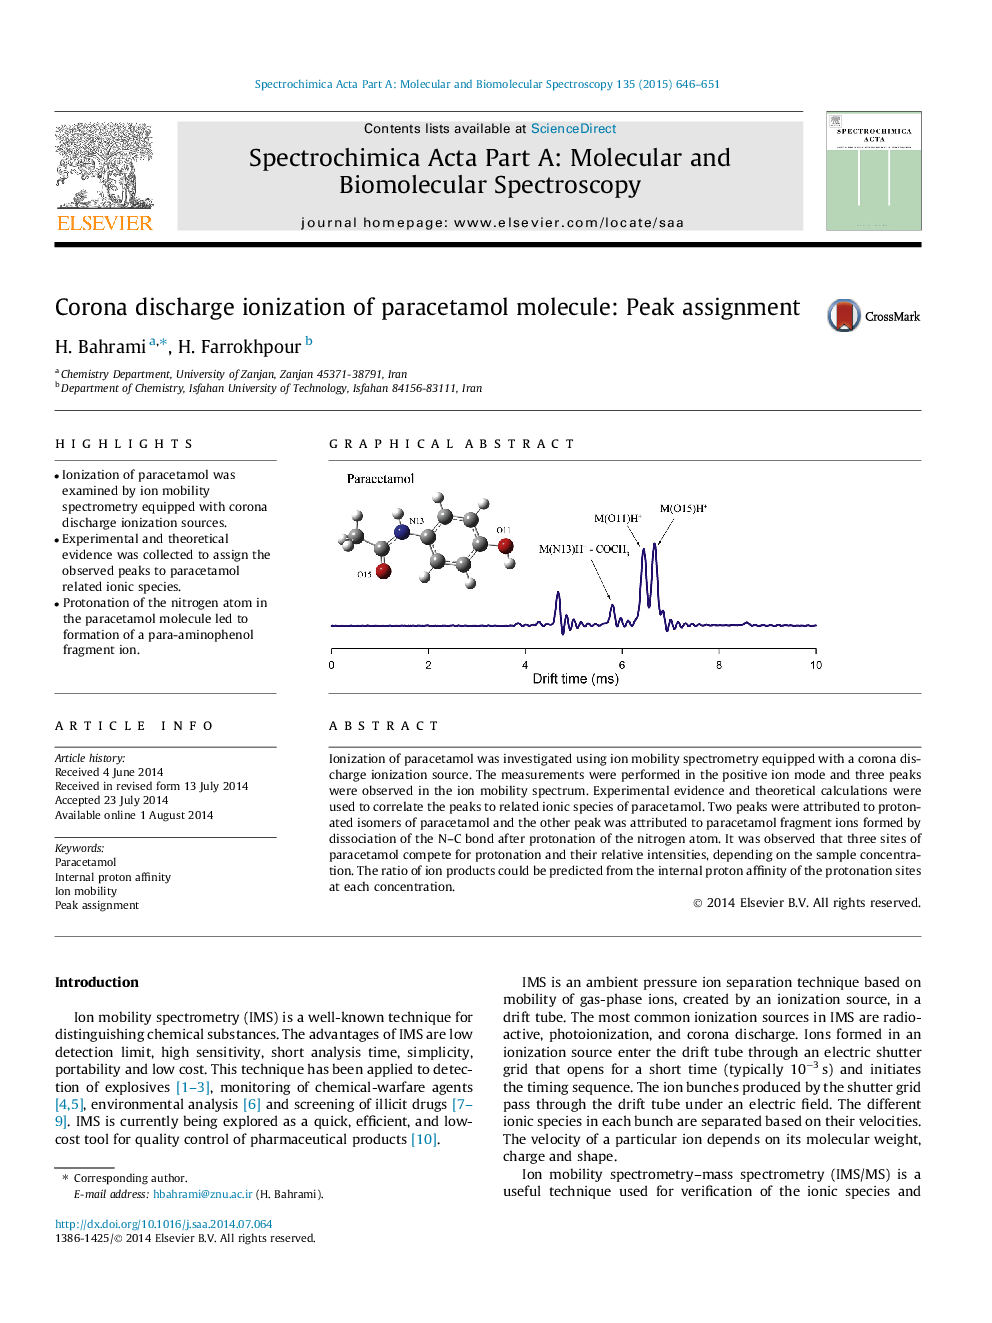 Corona discharge ionization of paracetamol molecule: Peak assignment